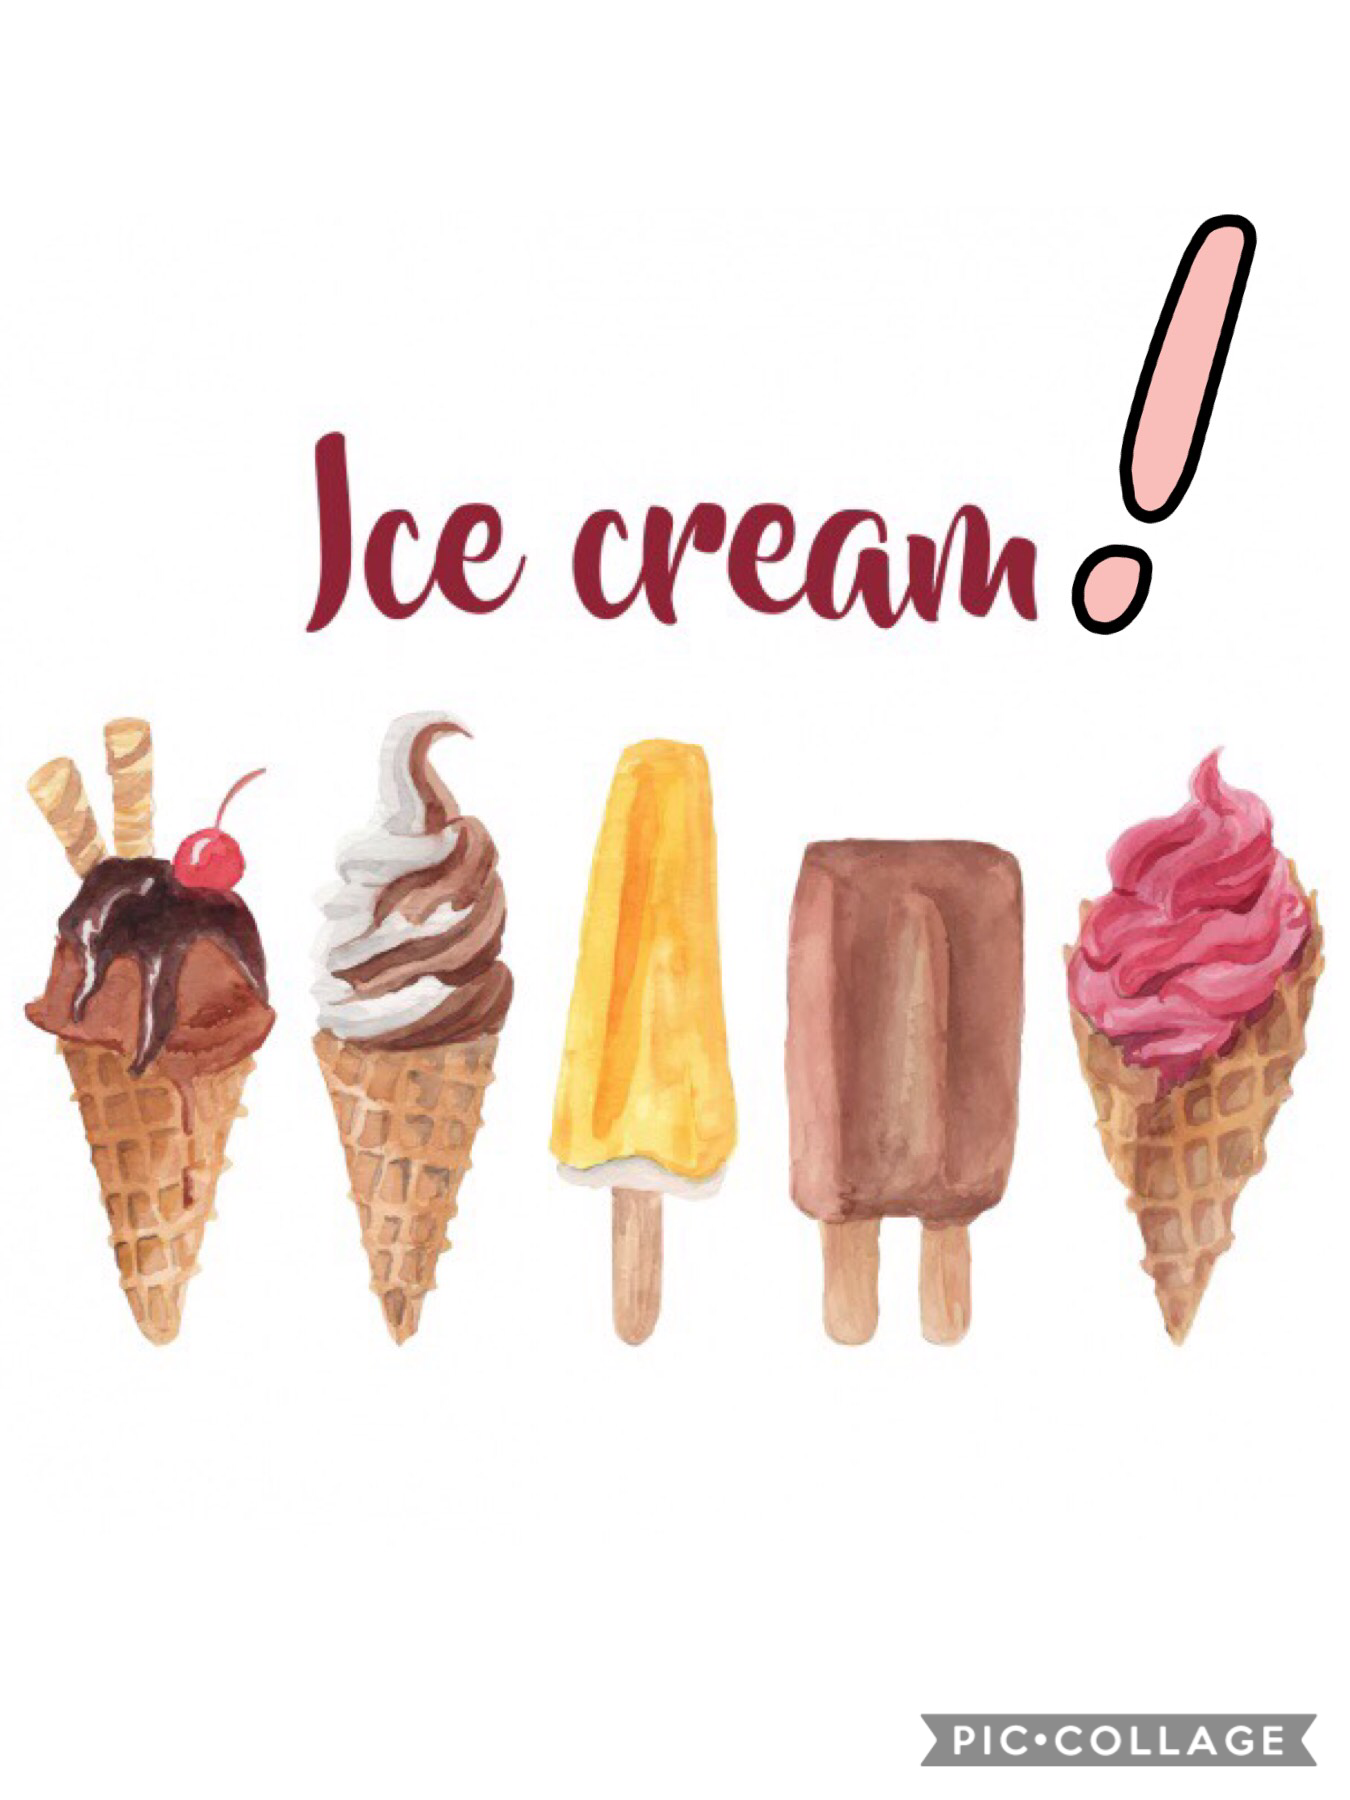 Who doesn’t like ice cream? 🍦